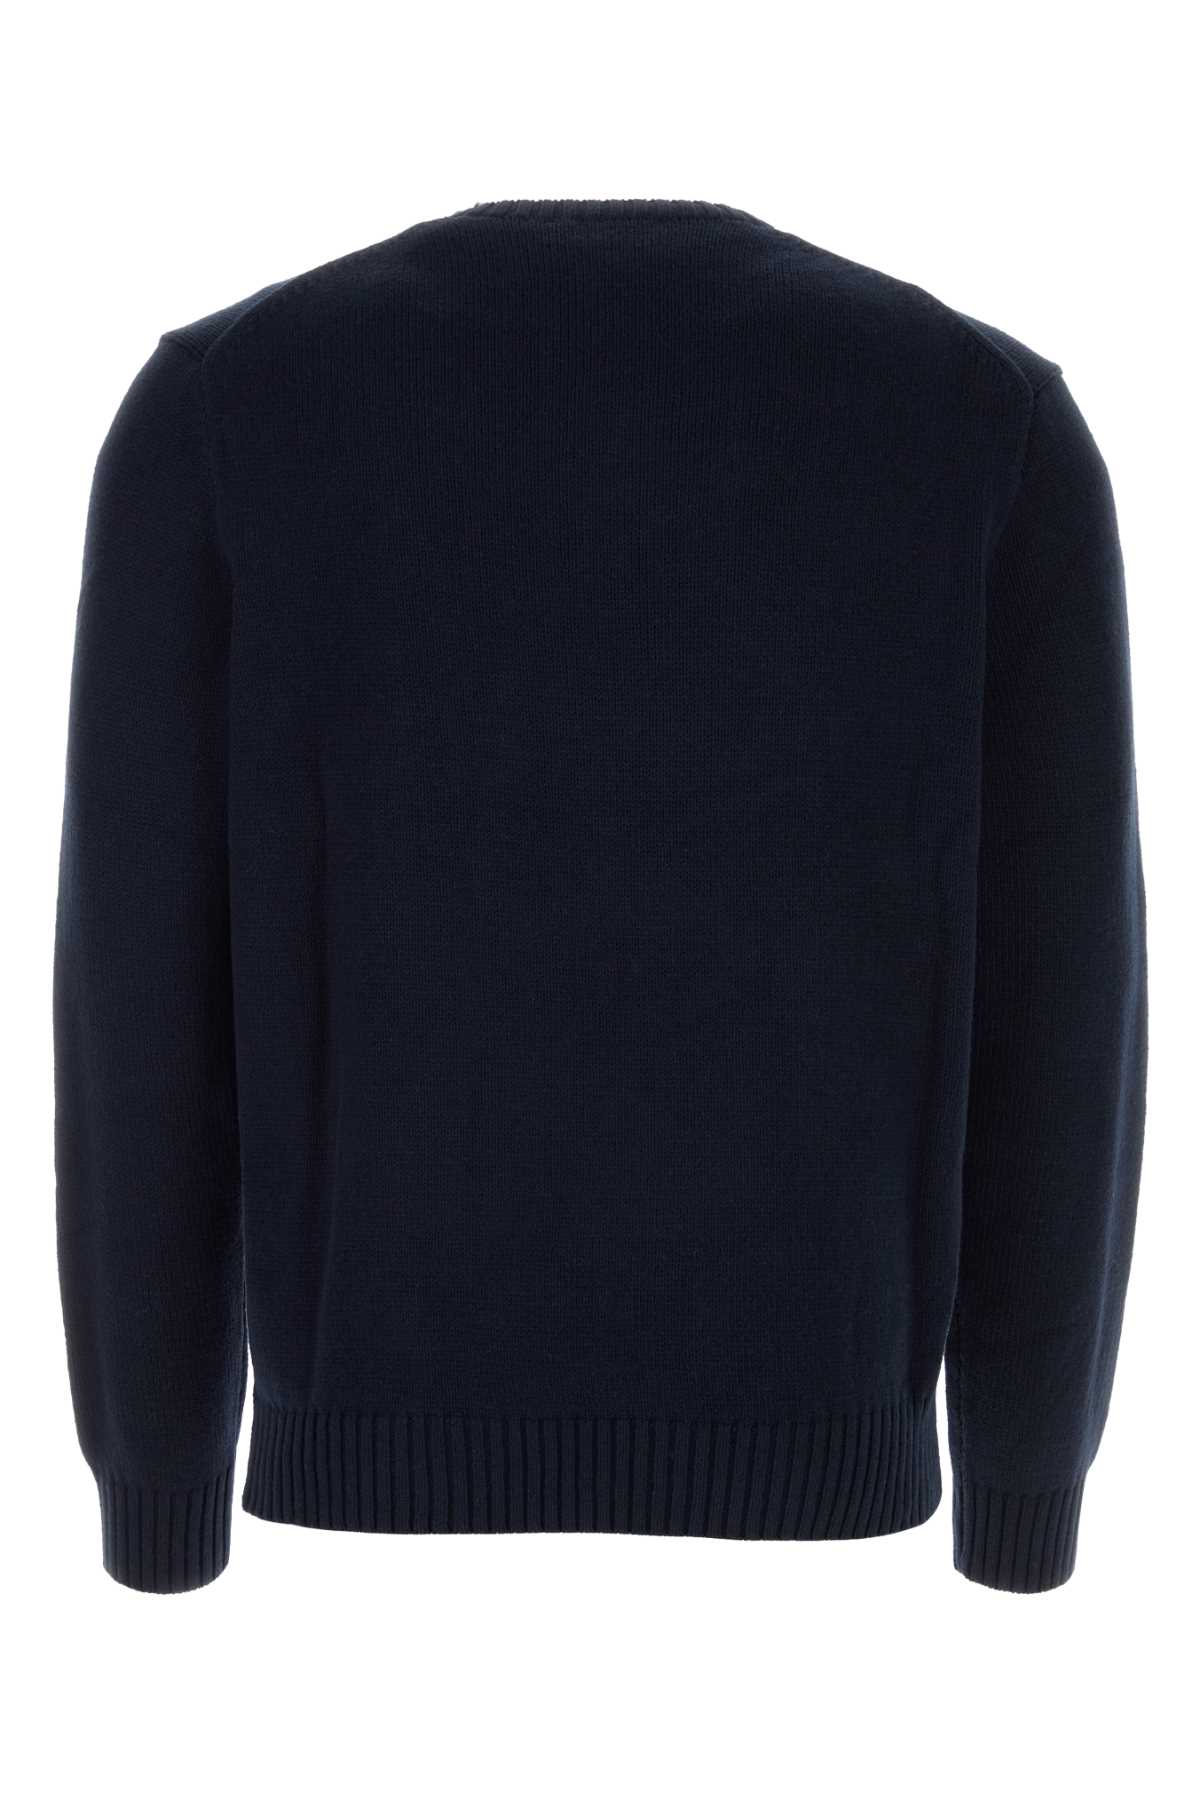 Shop Polo Ralph Lauren Navy Blue Cotton Sweater